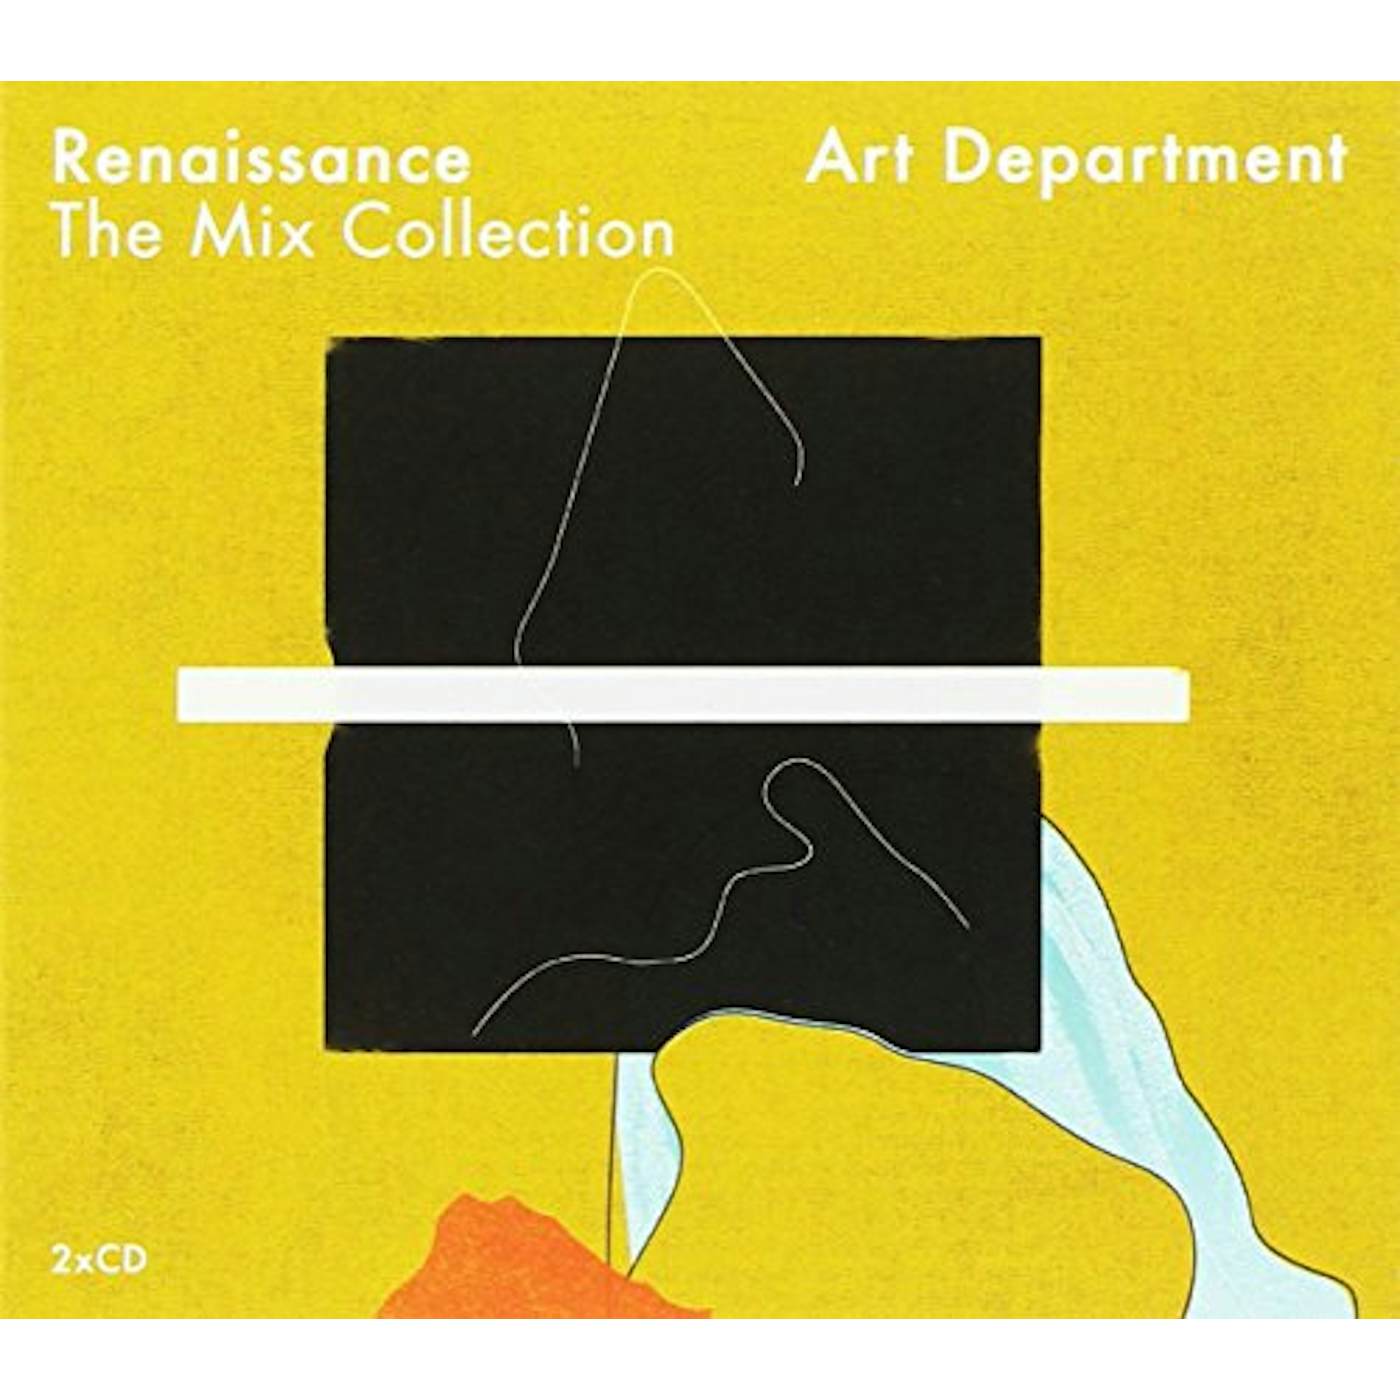 RENAISSANCE THE MIX COLLECTION: ART DEPARTMENT CD